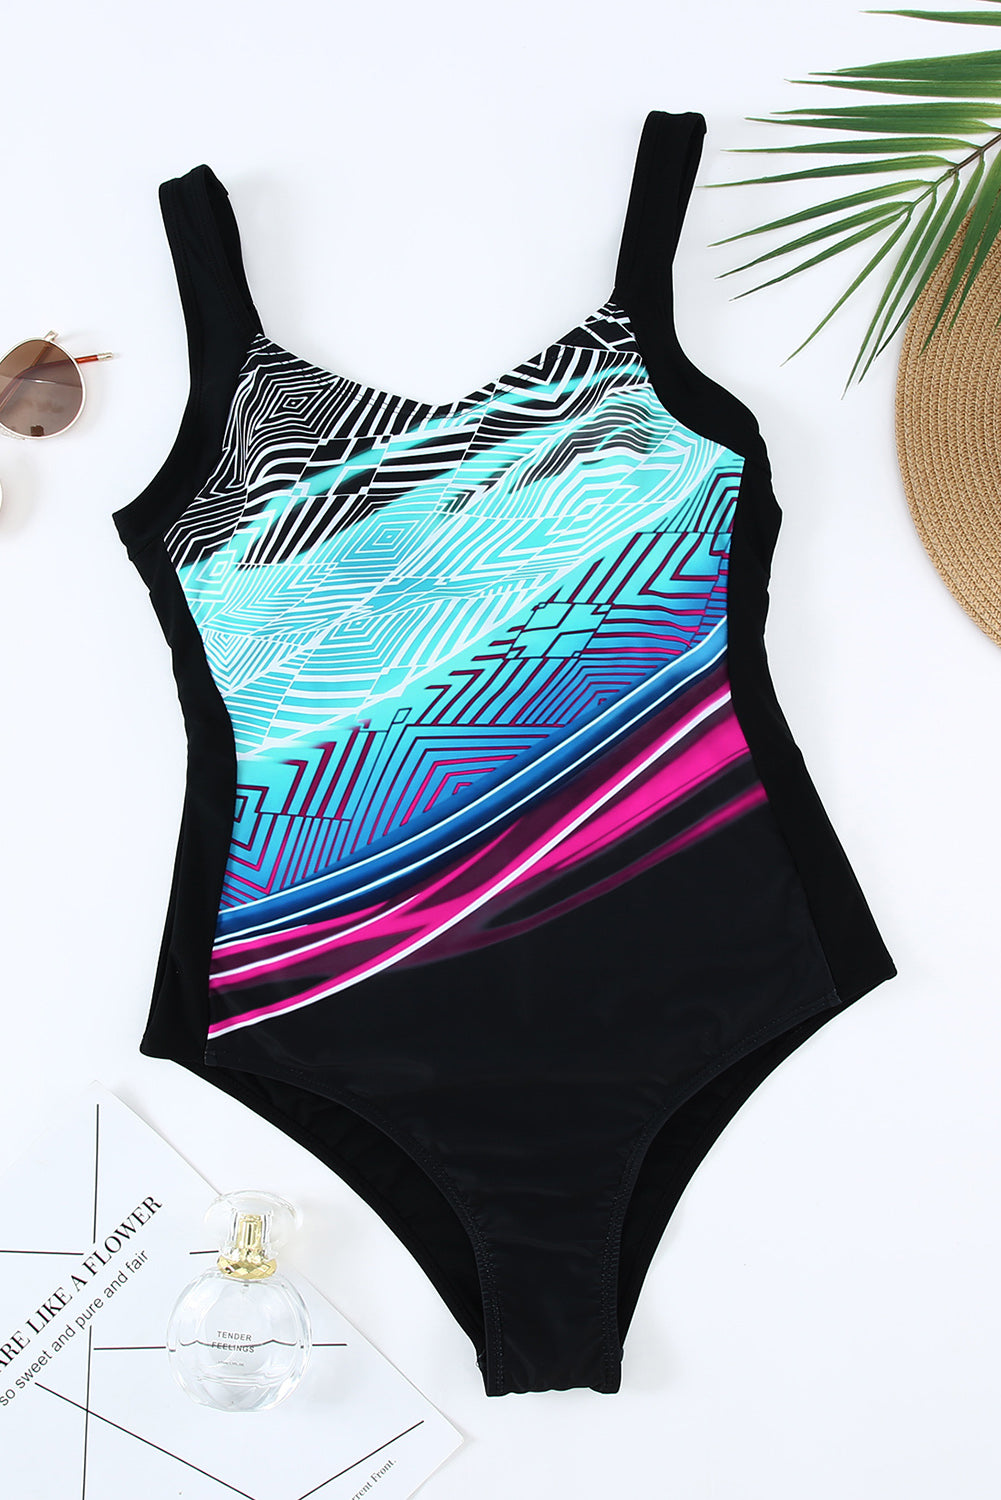 LC442787-4-S, LC442787-4-M, LC442787-4-L, LC442787-4-XL, LC442787-4-2XL, Sky Blue Women's One Piece Swimsuit Striped Pattern Print Sleeveless Bathing Suit